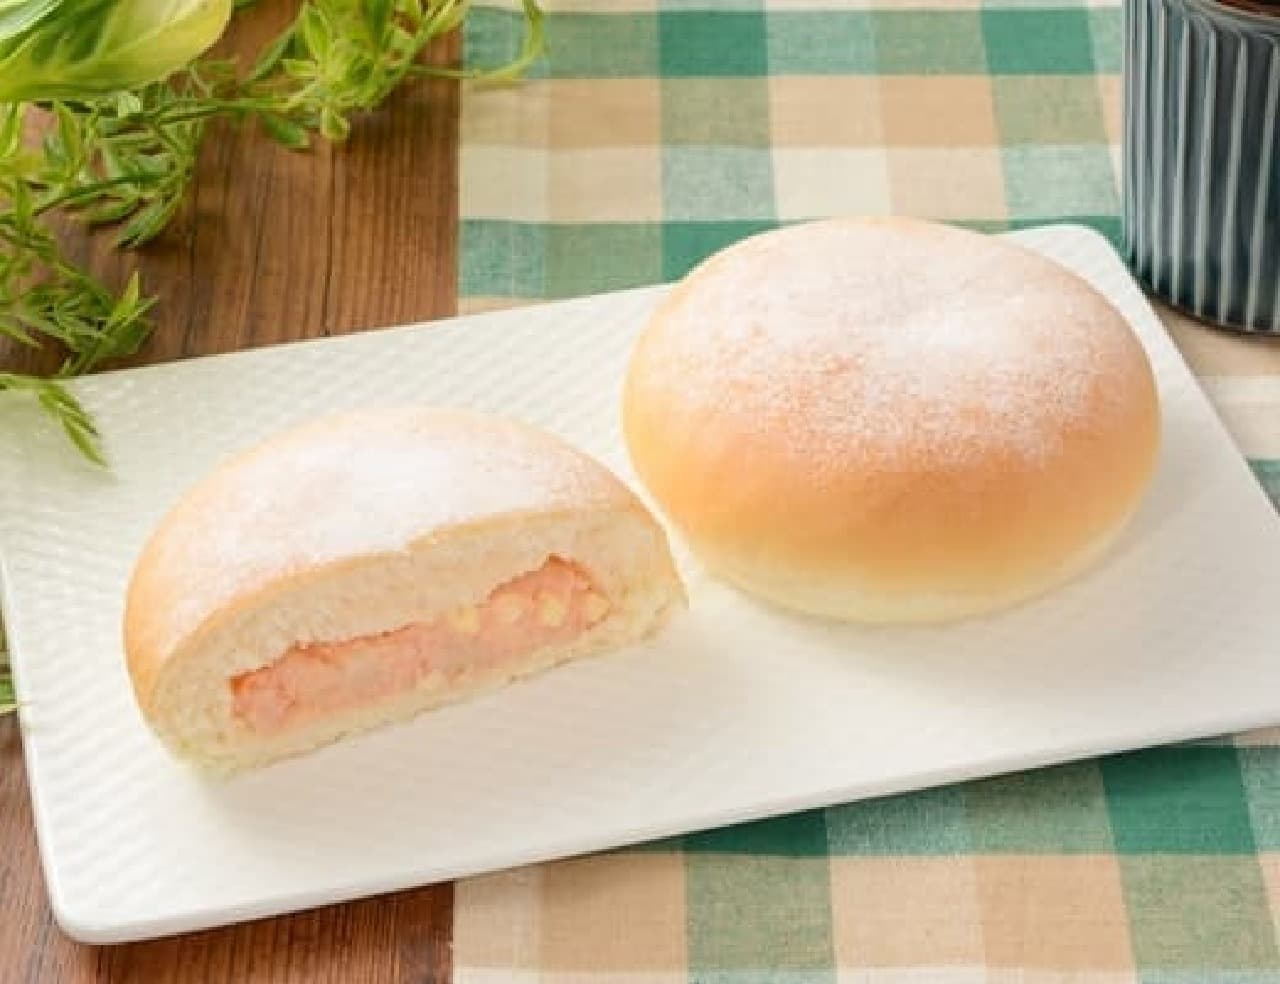 Lawson "Menta potato cheese bun with rice flour"